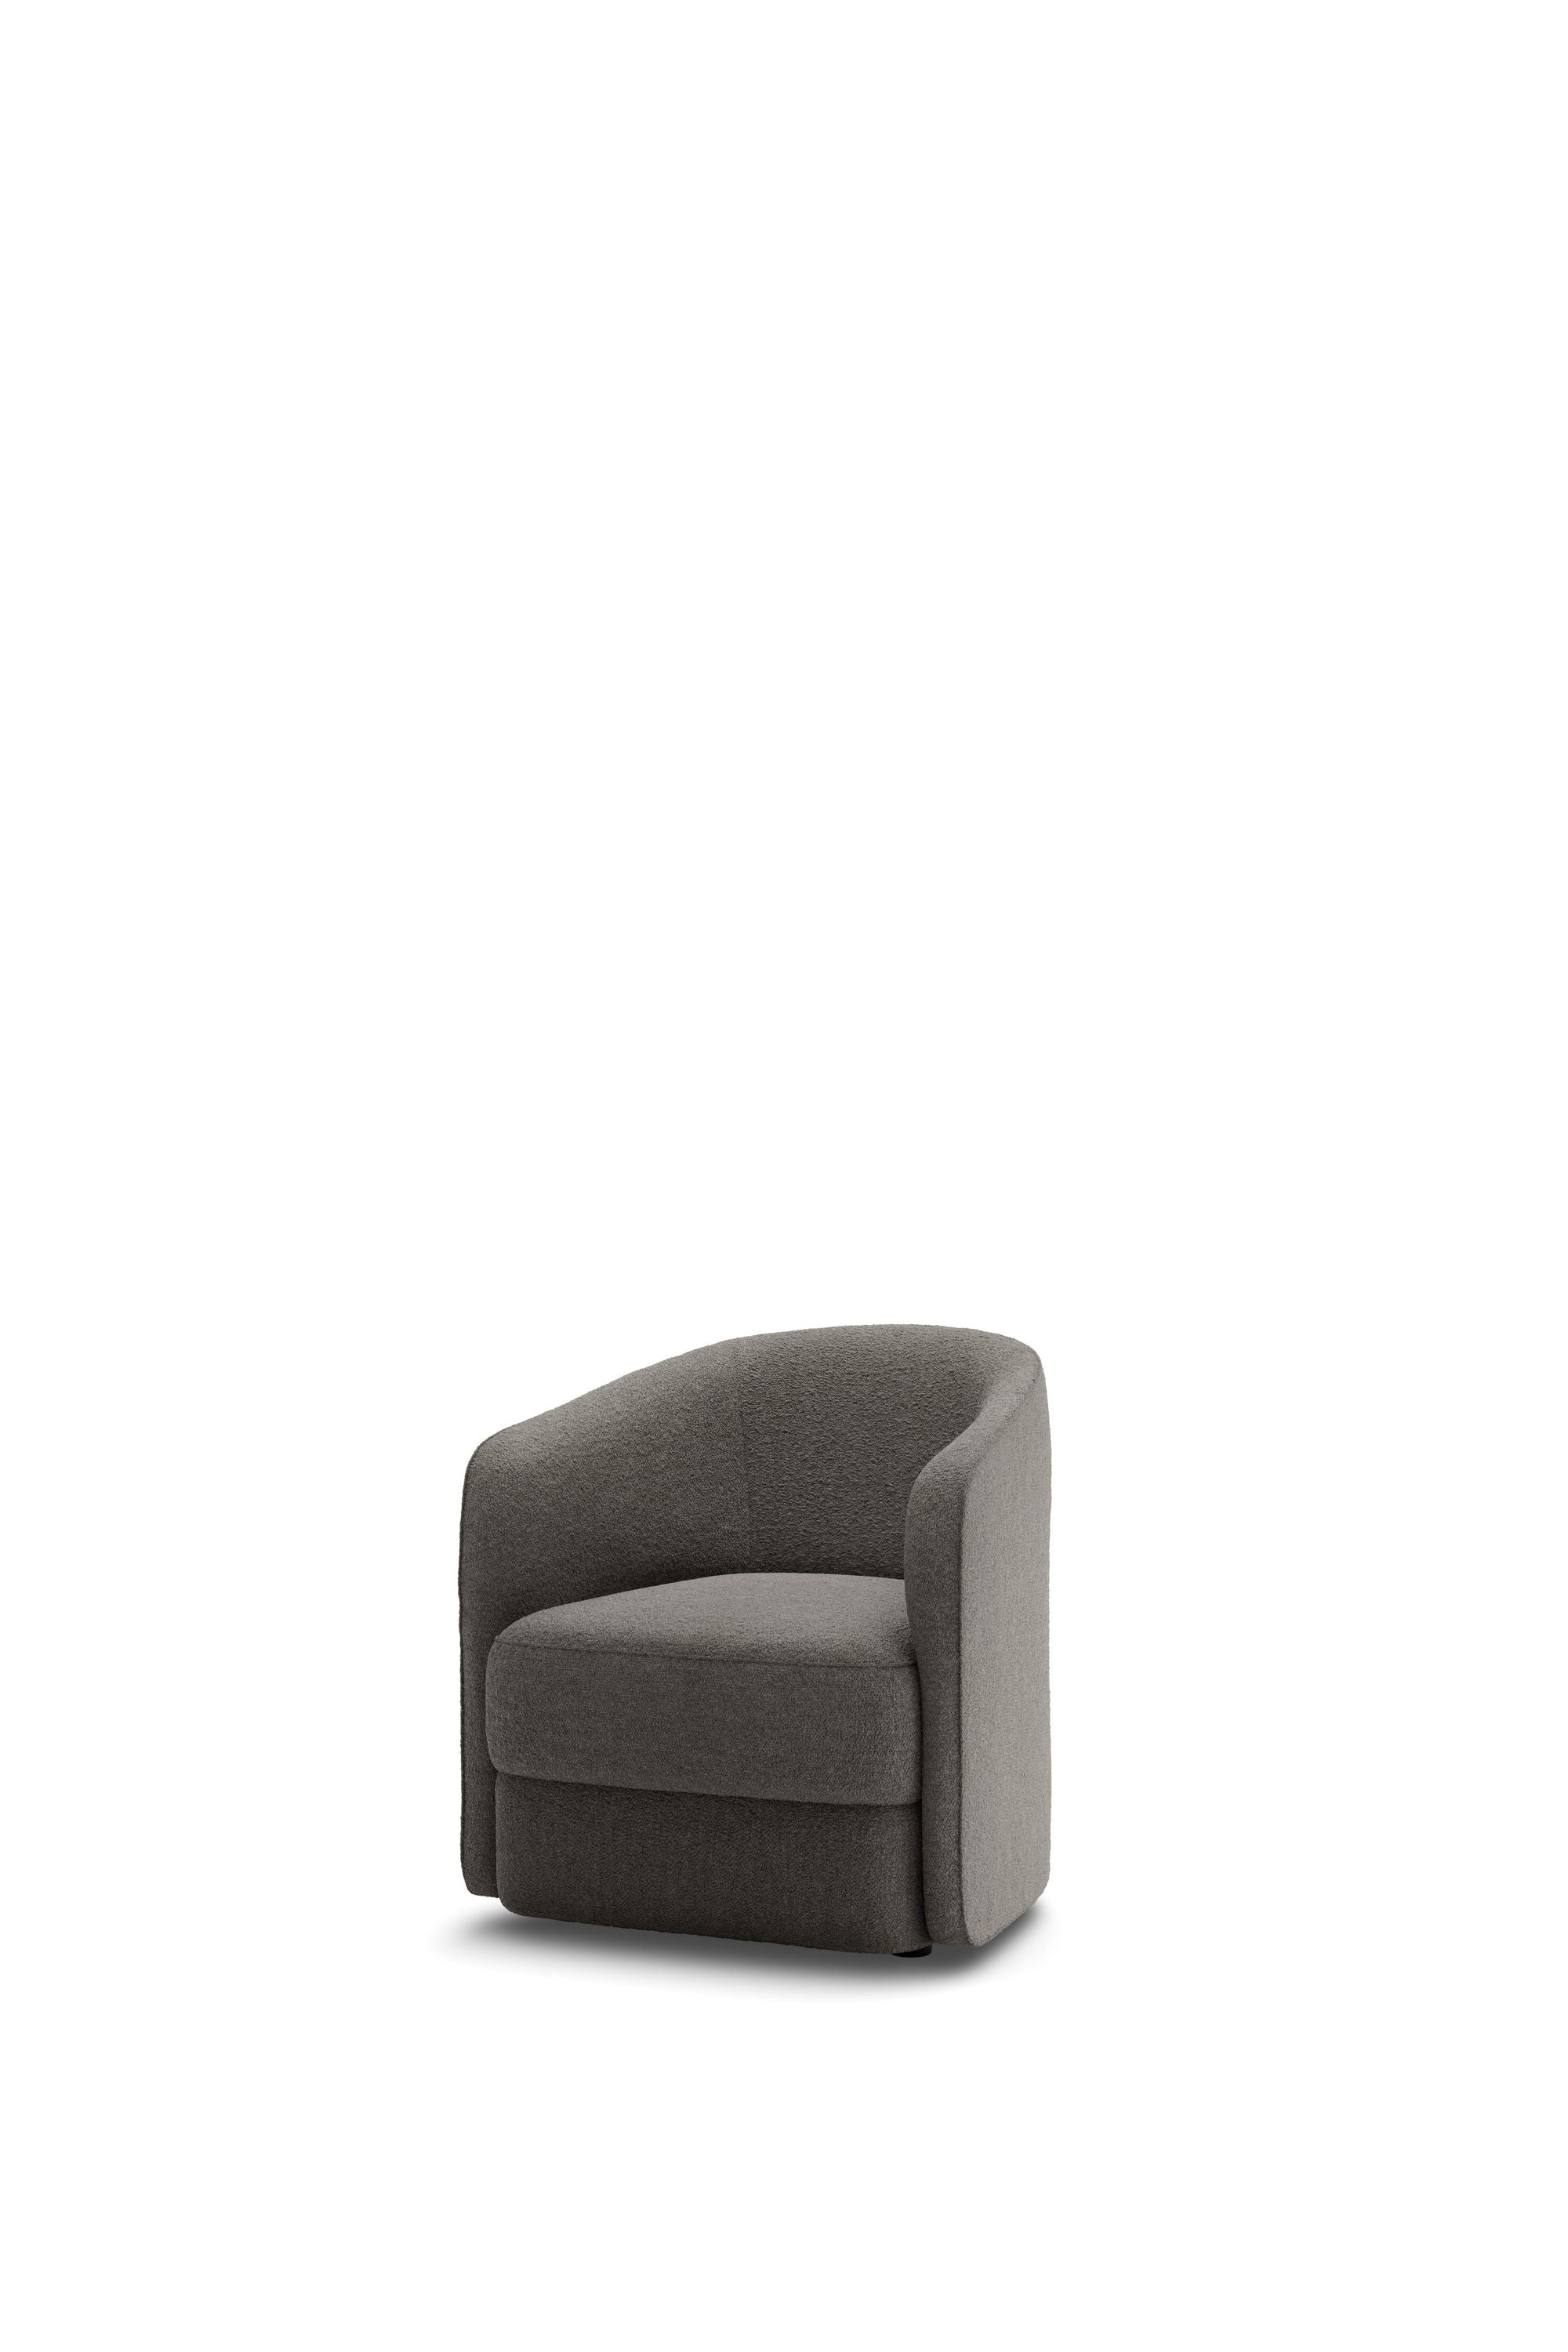 Nová díla Covent Lounge Chair Úzká, Dark Taupe